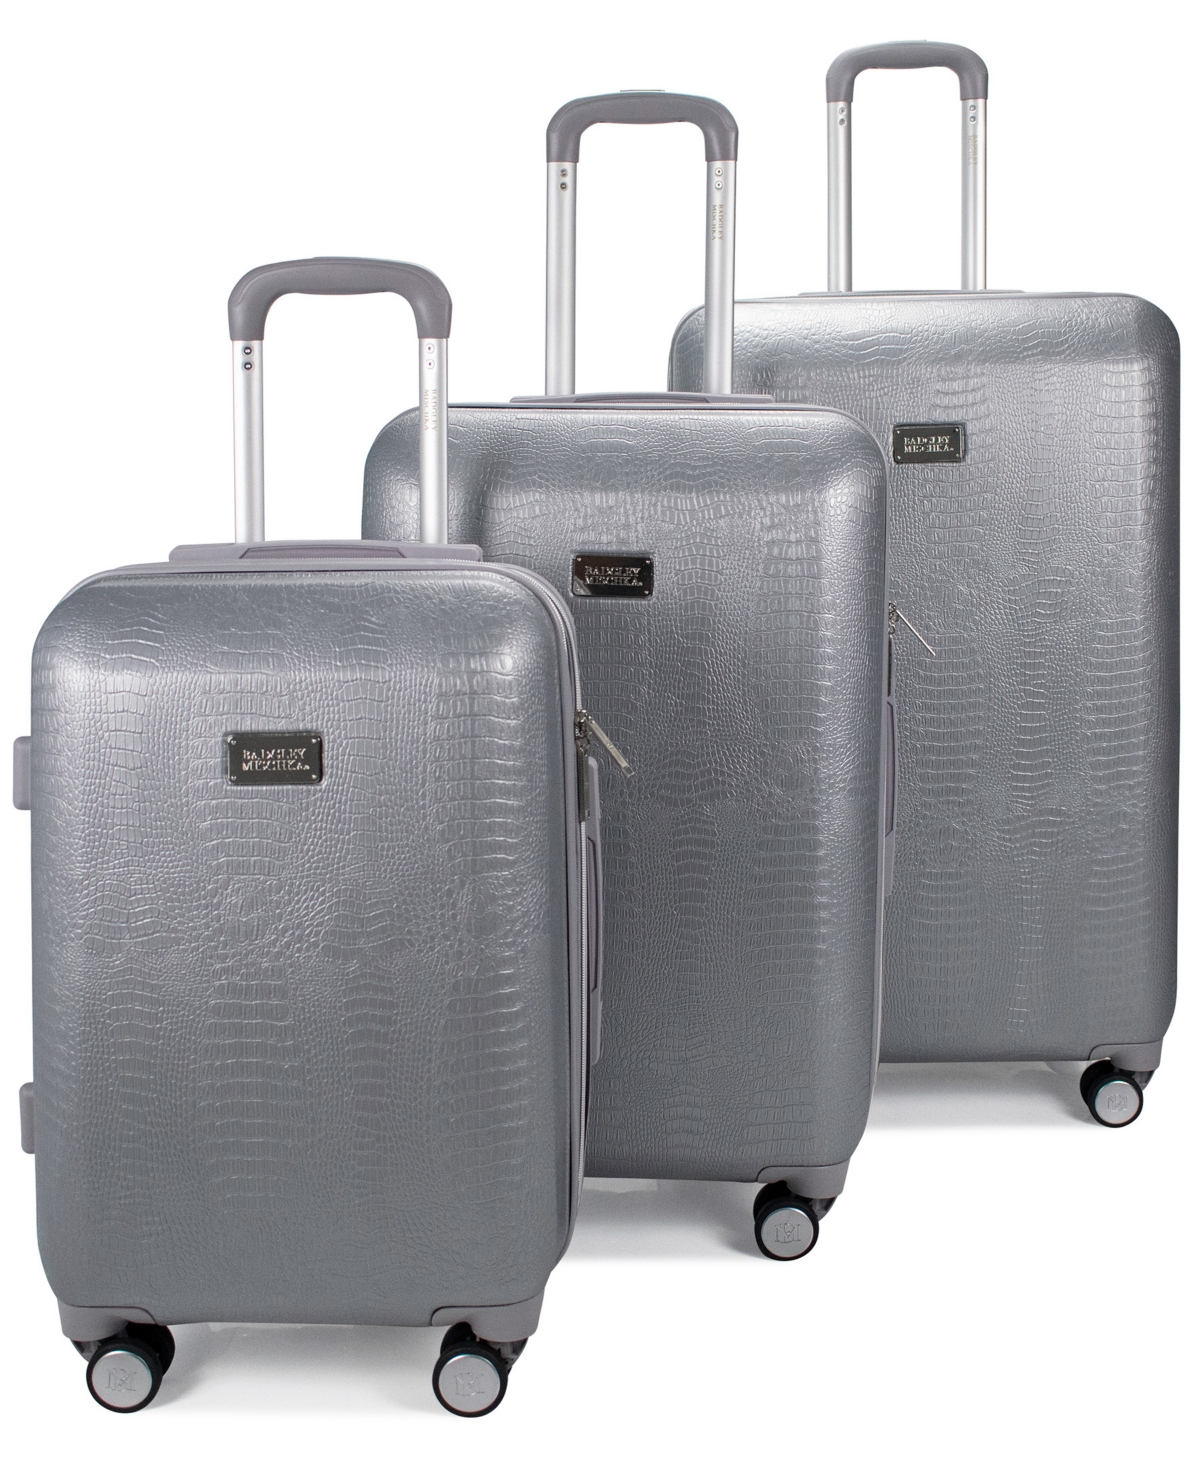 Snakeskin Expandable Luggage Set, 3 Piece - Silver-Tone